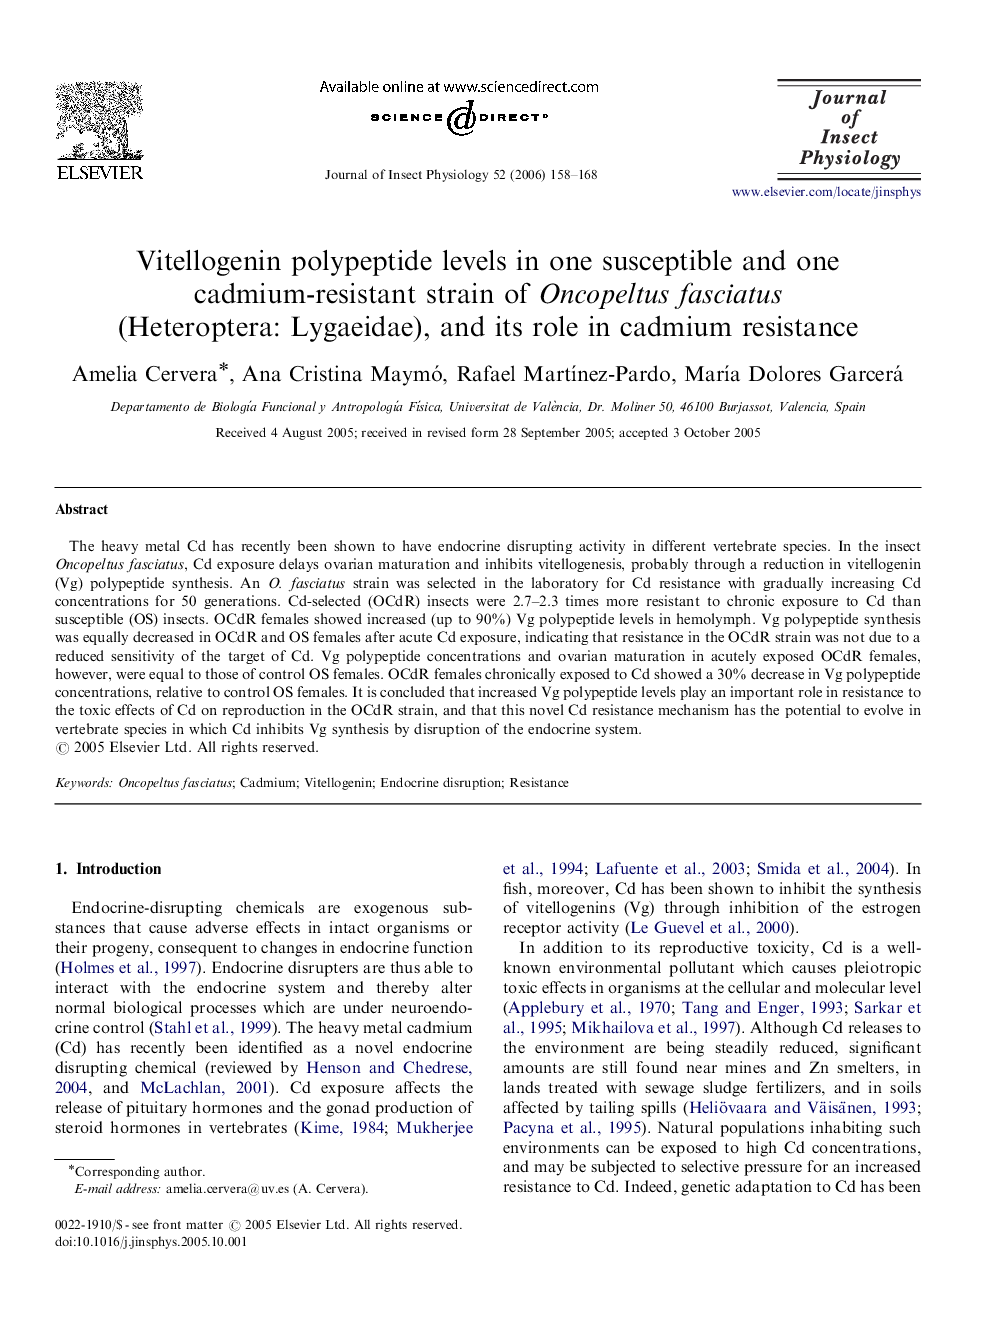 Vitellogenin polypeptide levels in one susceptible and one cadmium-resistant strain of Oncopeltus fasciatus (Heteroptera: Lygaeidae), and its role in cadmium resistance